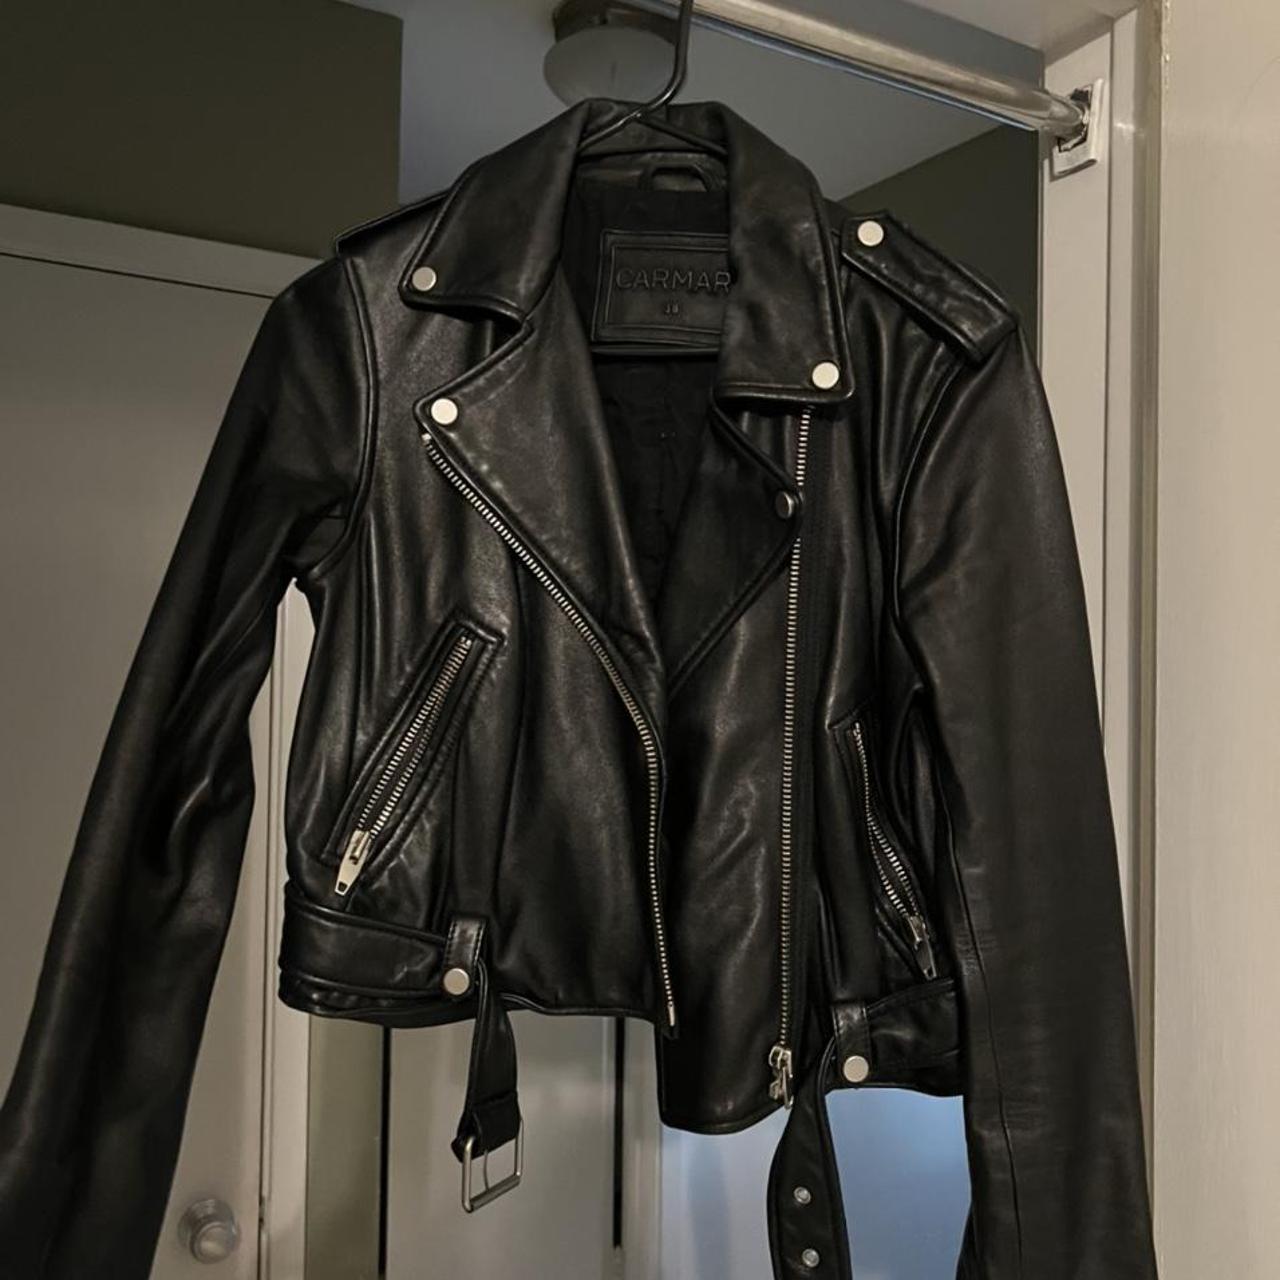 LF Carmar Real Leather Jacket. Size 38, best fits a... - Depop